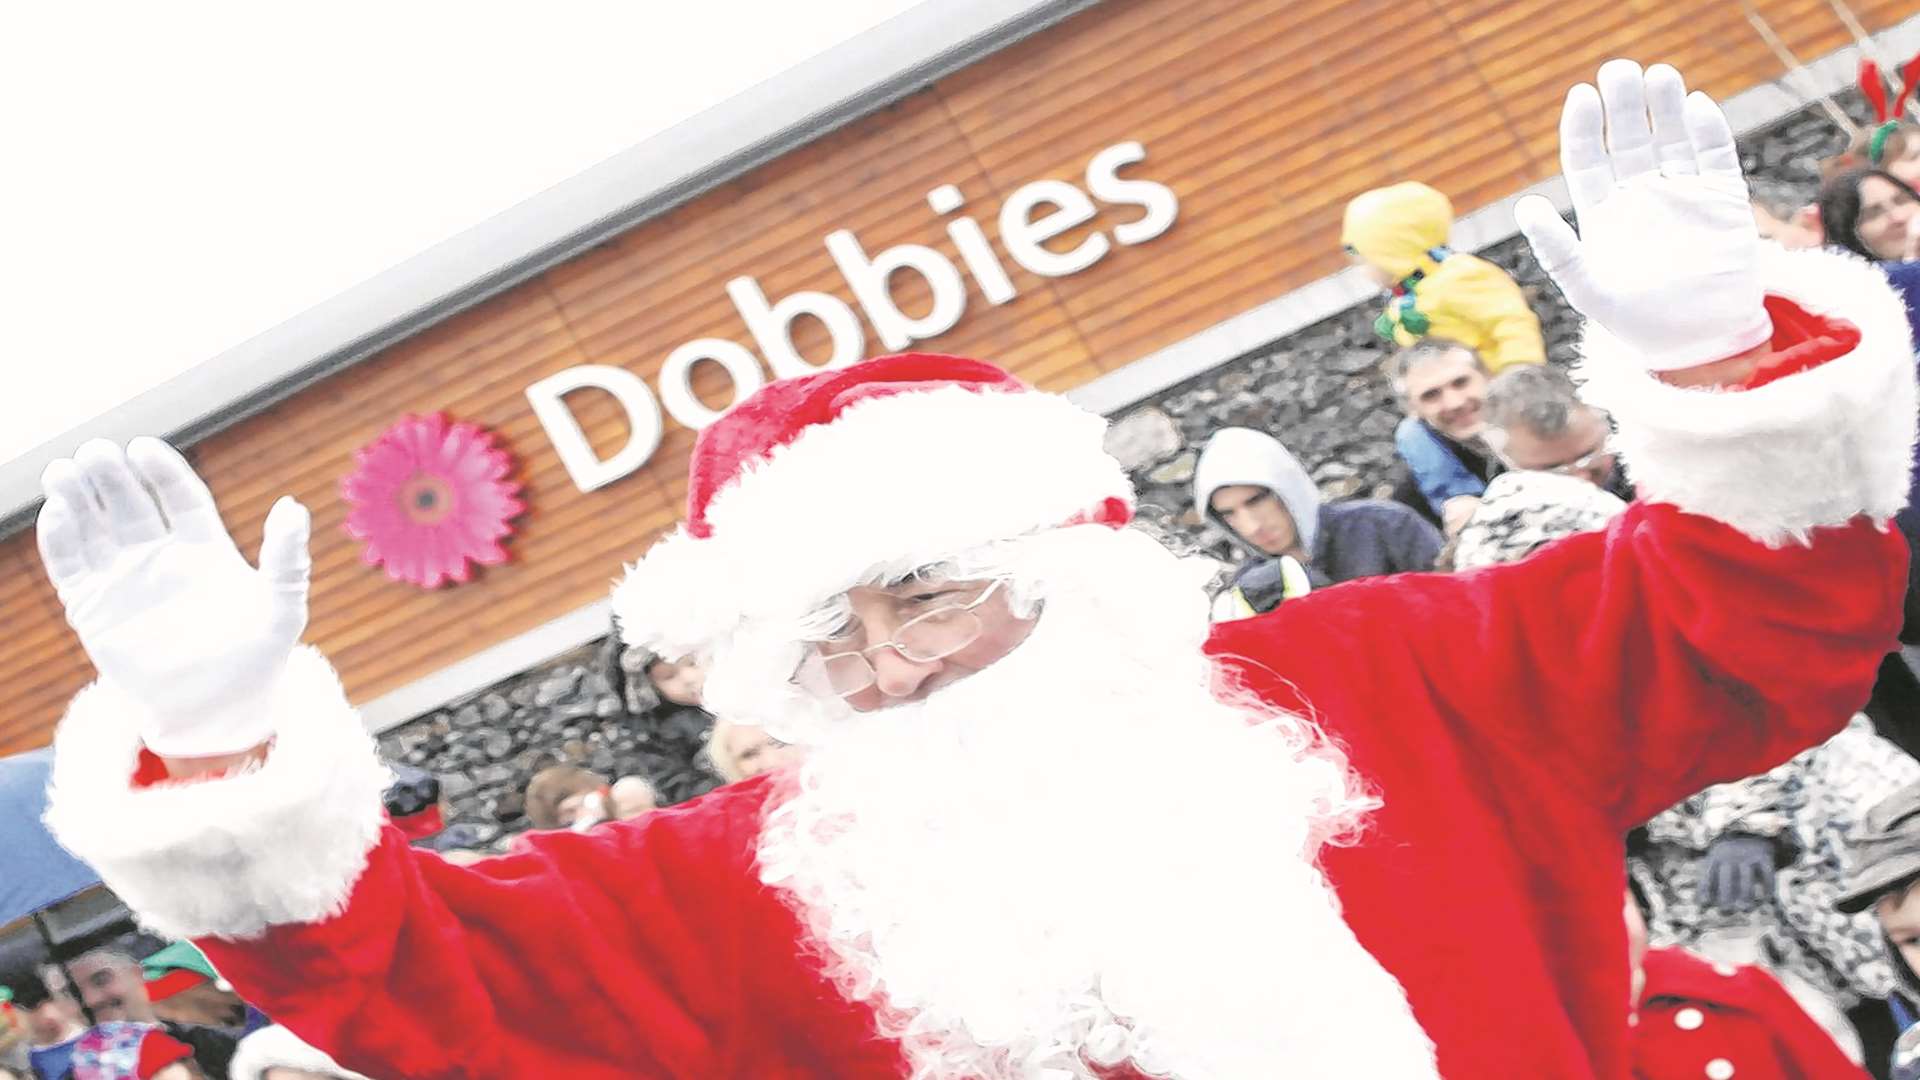 Santa is heading to Dobbies